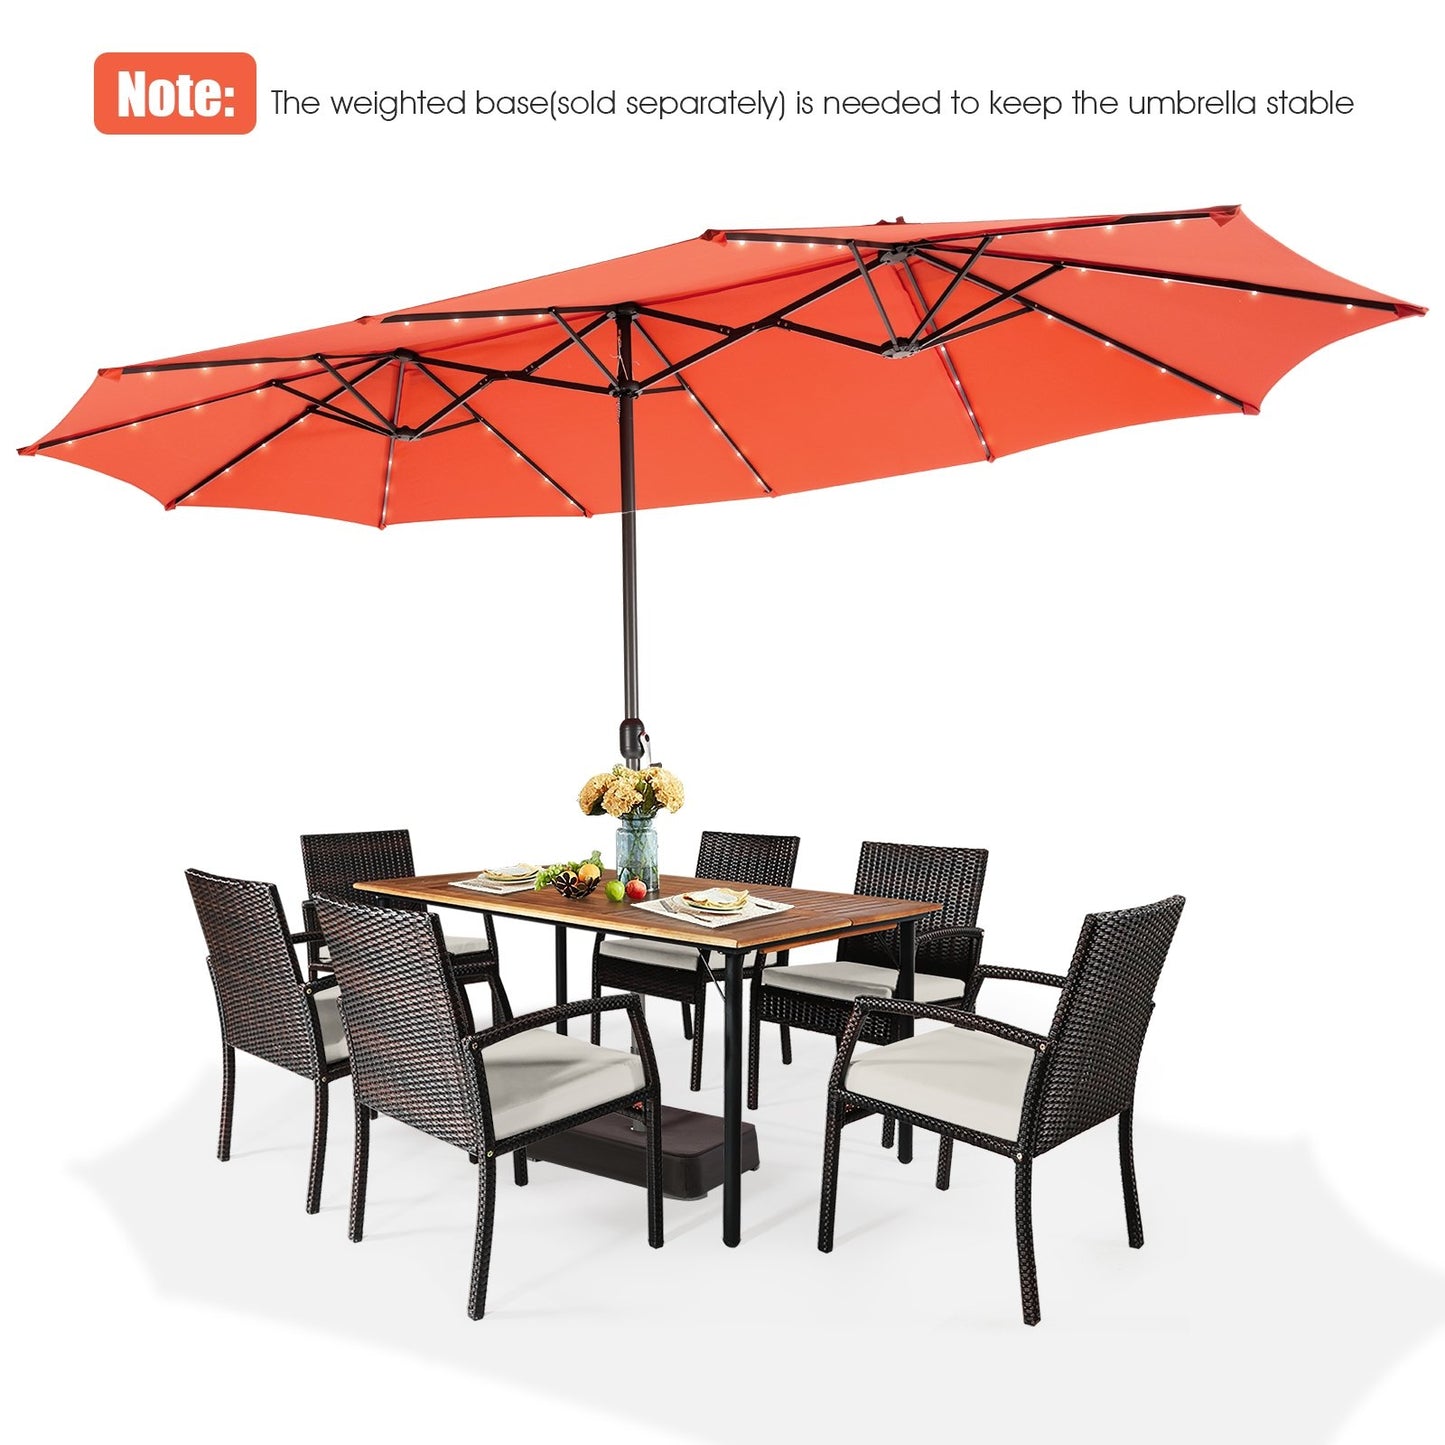 15 Feet Twin Patio Umbrella with 48 Solar LED Lights, Orange - Gallery Canada